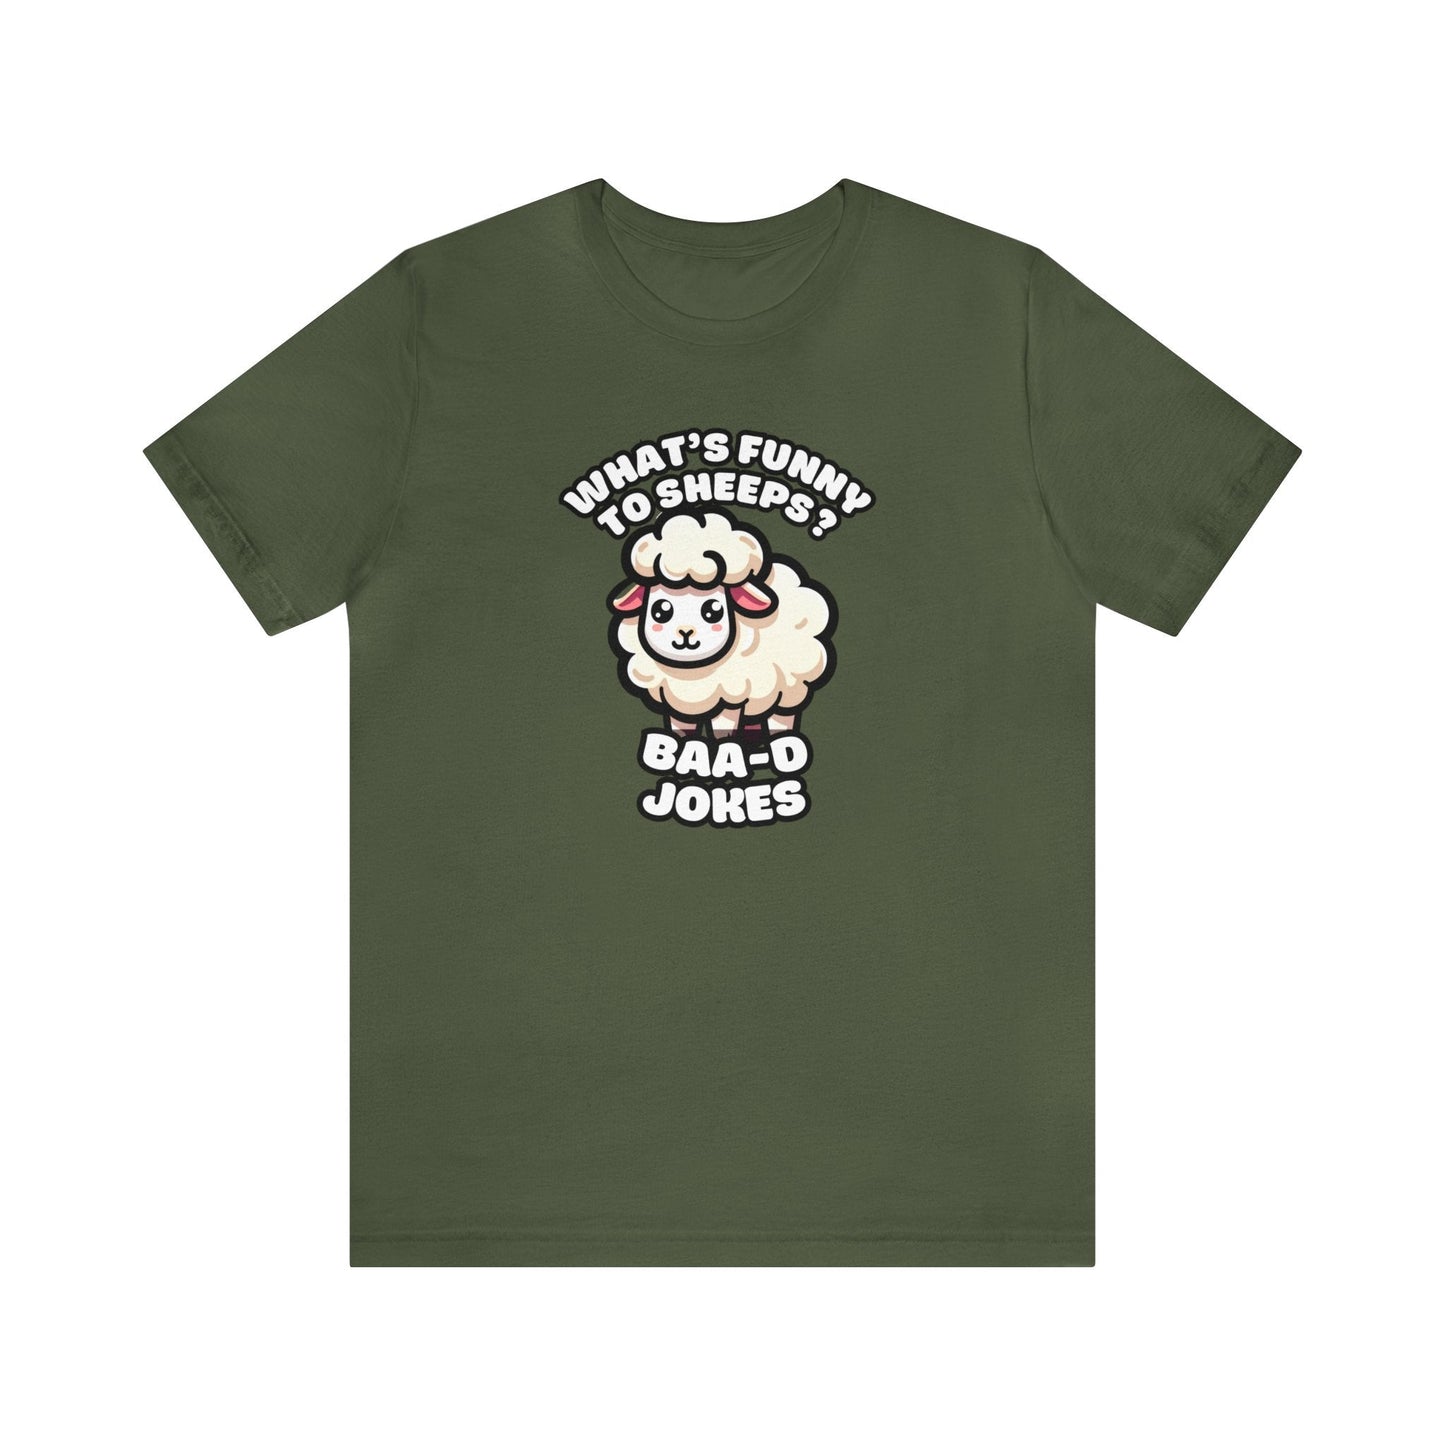 Baa-d Jokes - Sheep T-shirt Military Green / S